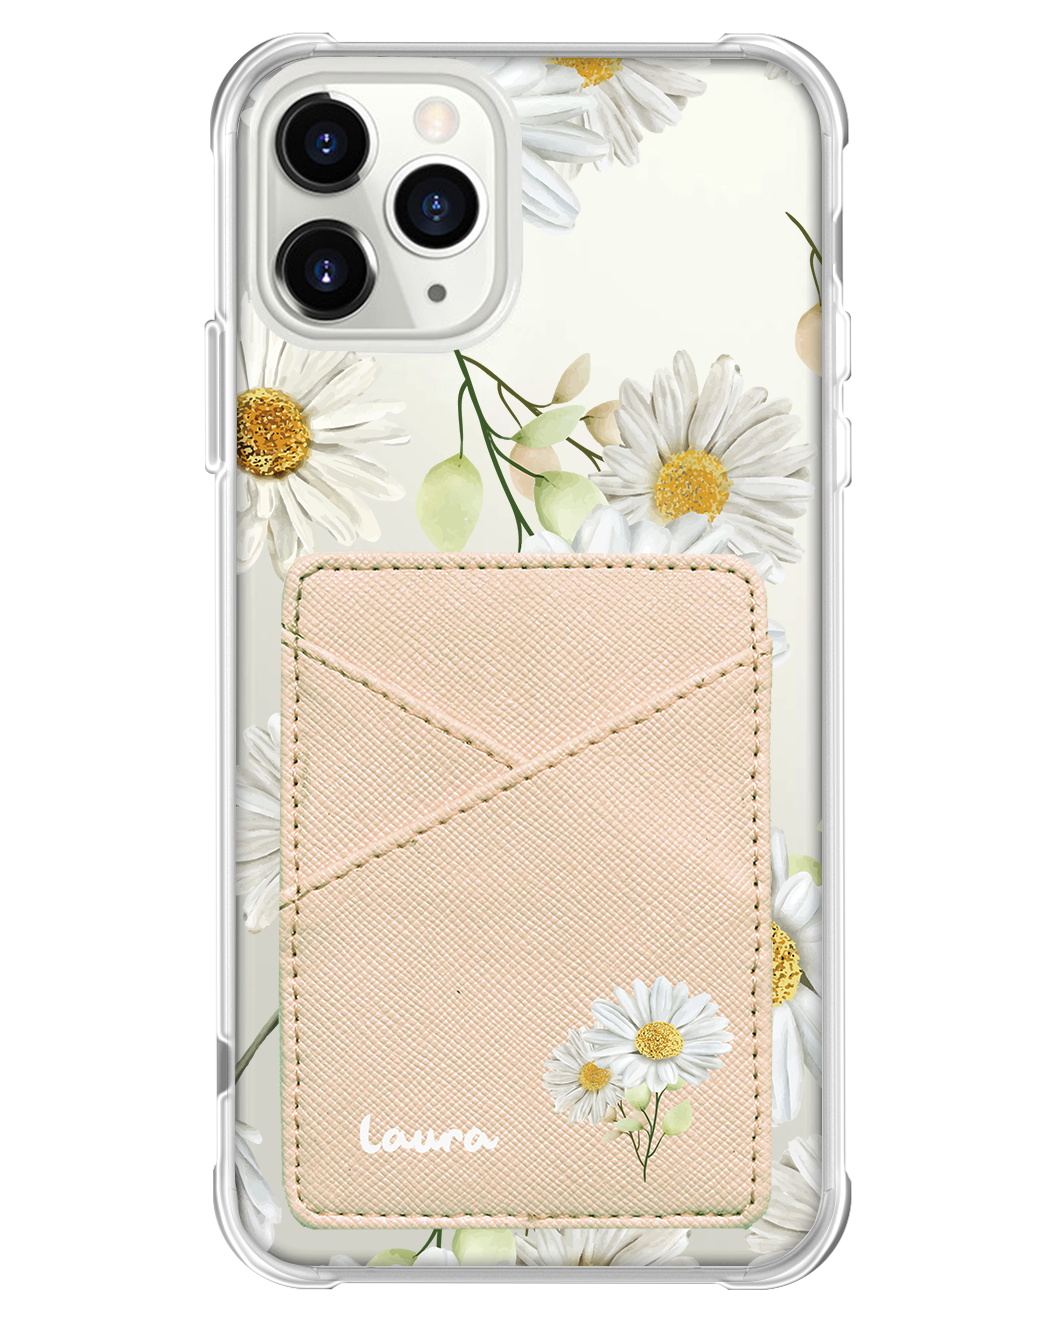 iPhone Phone Wallet Case - October Chrysanthemum 1.0